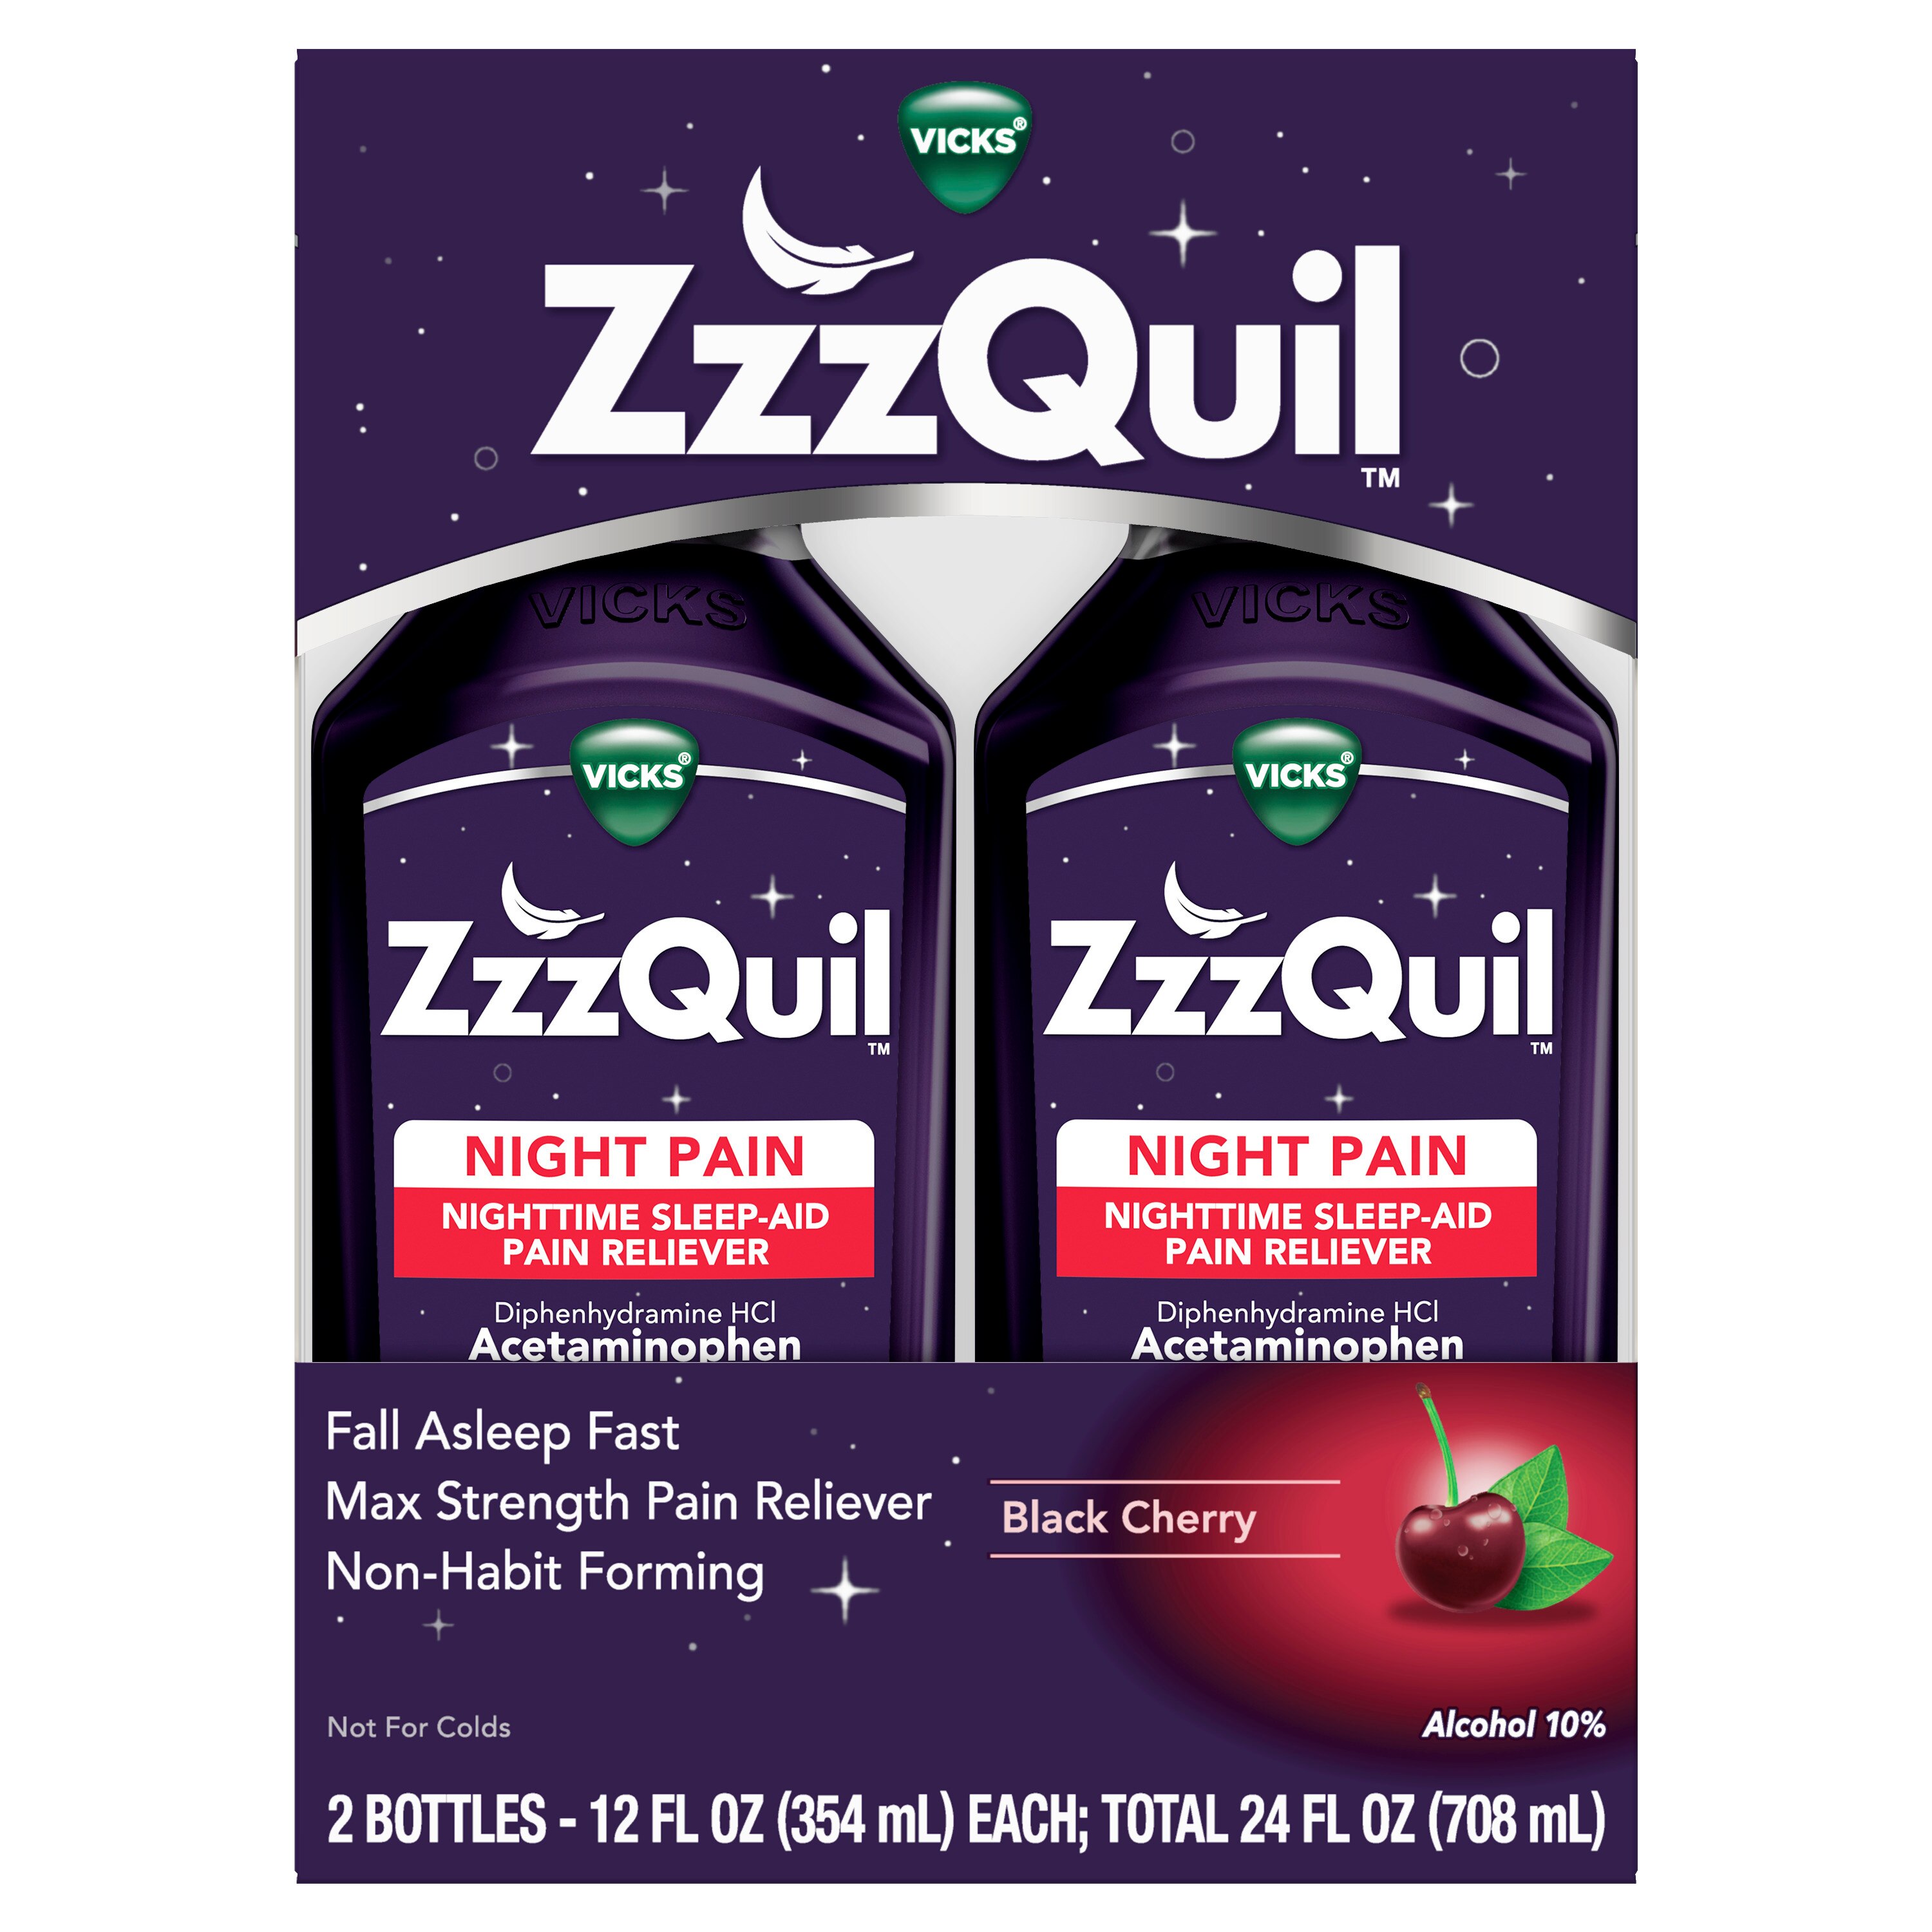 Vicks ZzzQuil Night Pain Liquid, Nighttime Sleep-Aid Pain Reliever, Black Cherry, 2 12 FL OZ